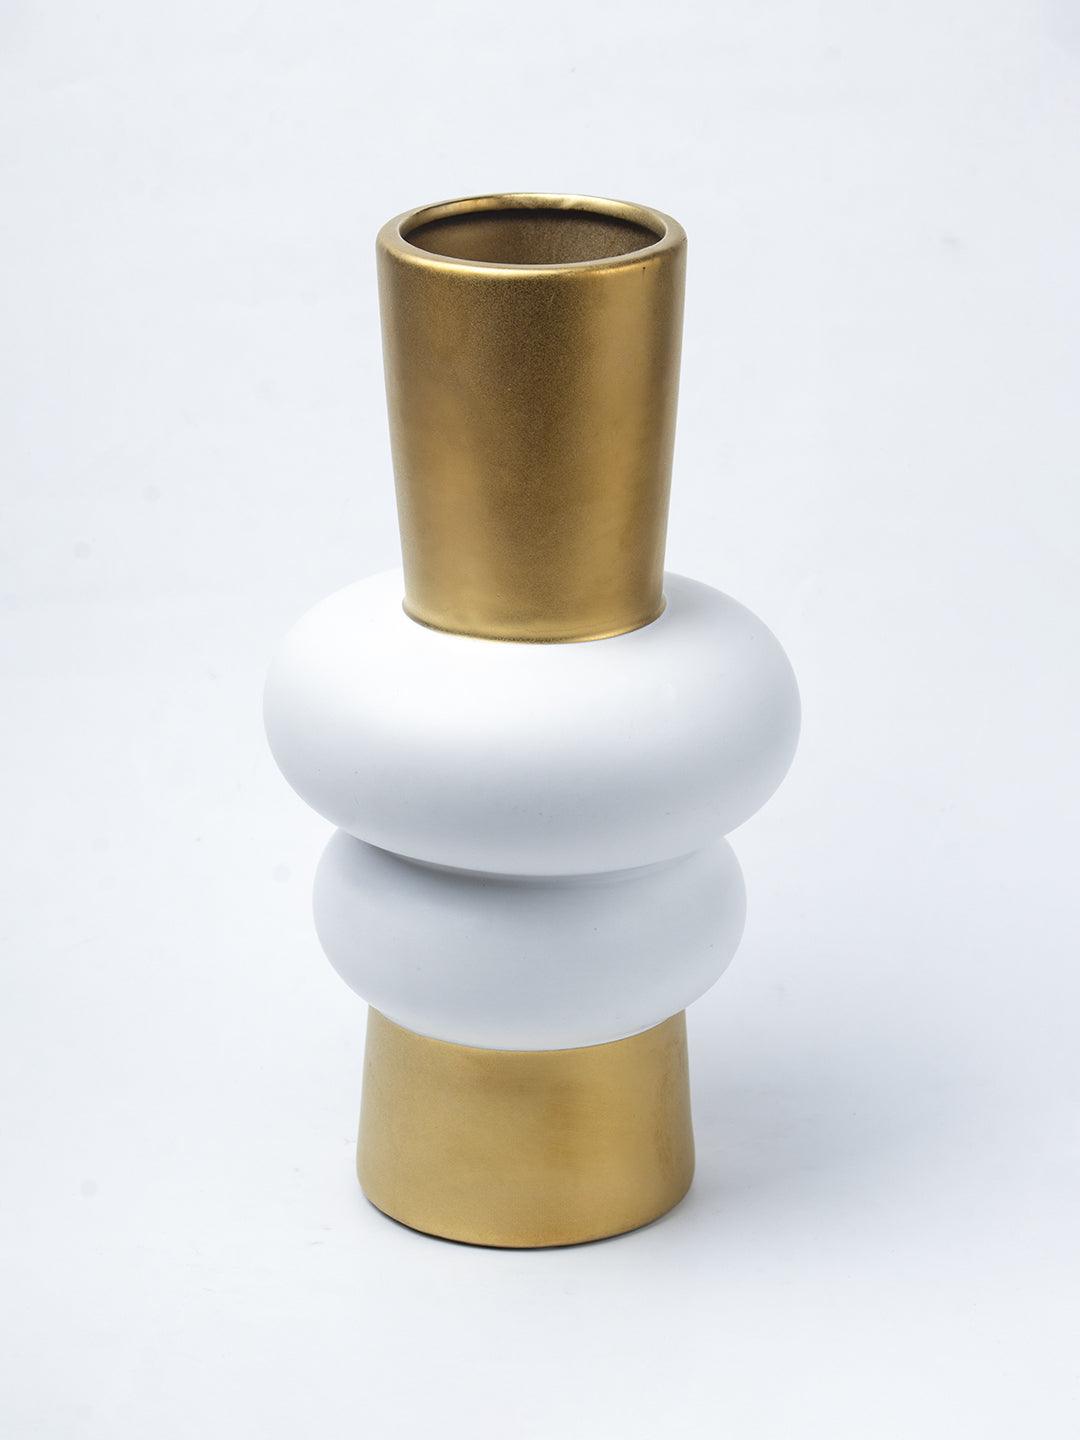 Stylish Ceramic Vase - White & Golden, Contemporary Design - 3